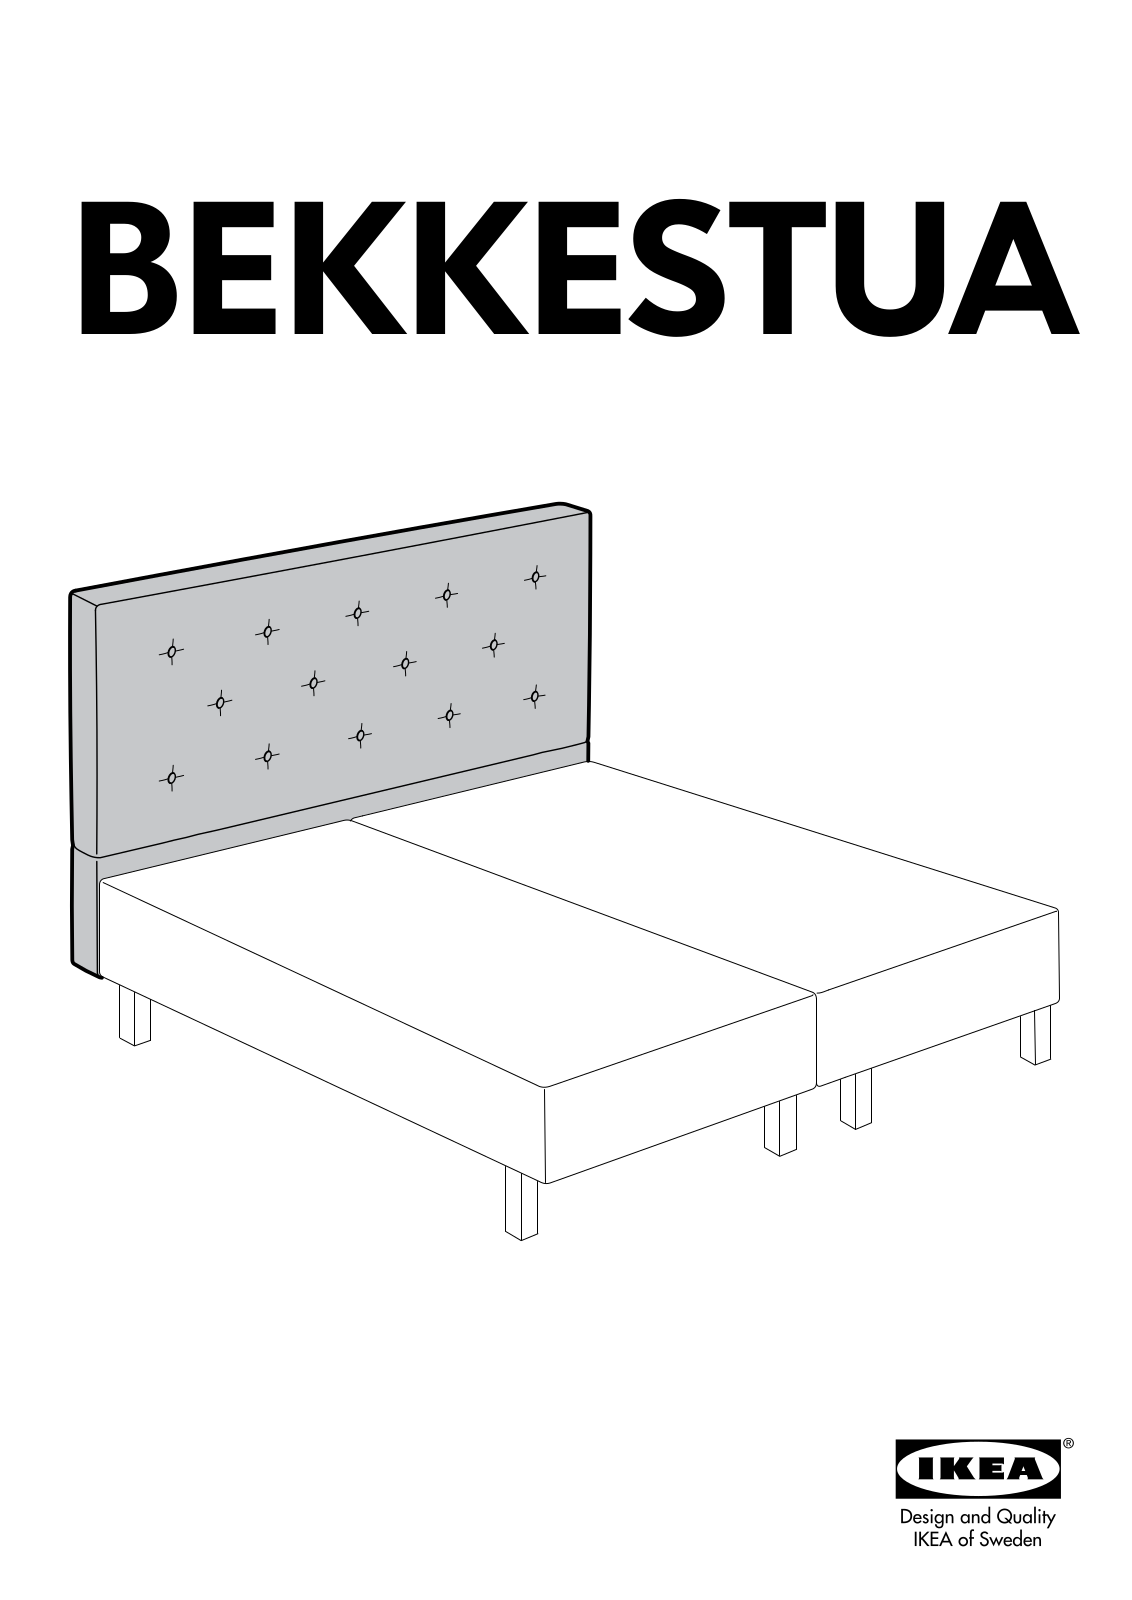 IKEA BEKKESTUA User Manual